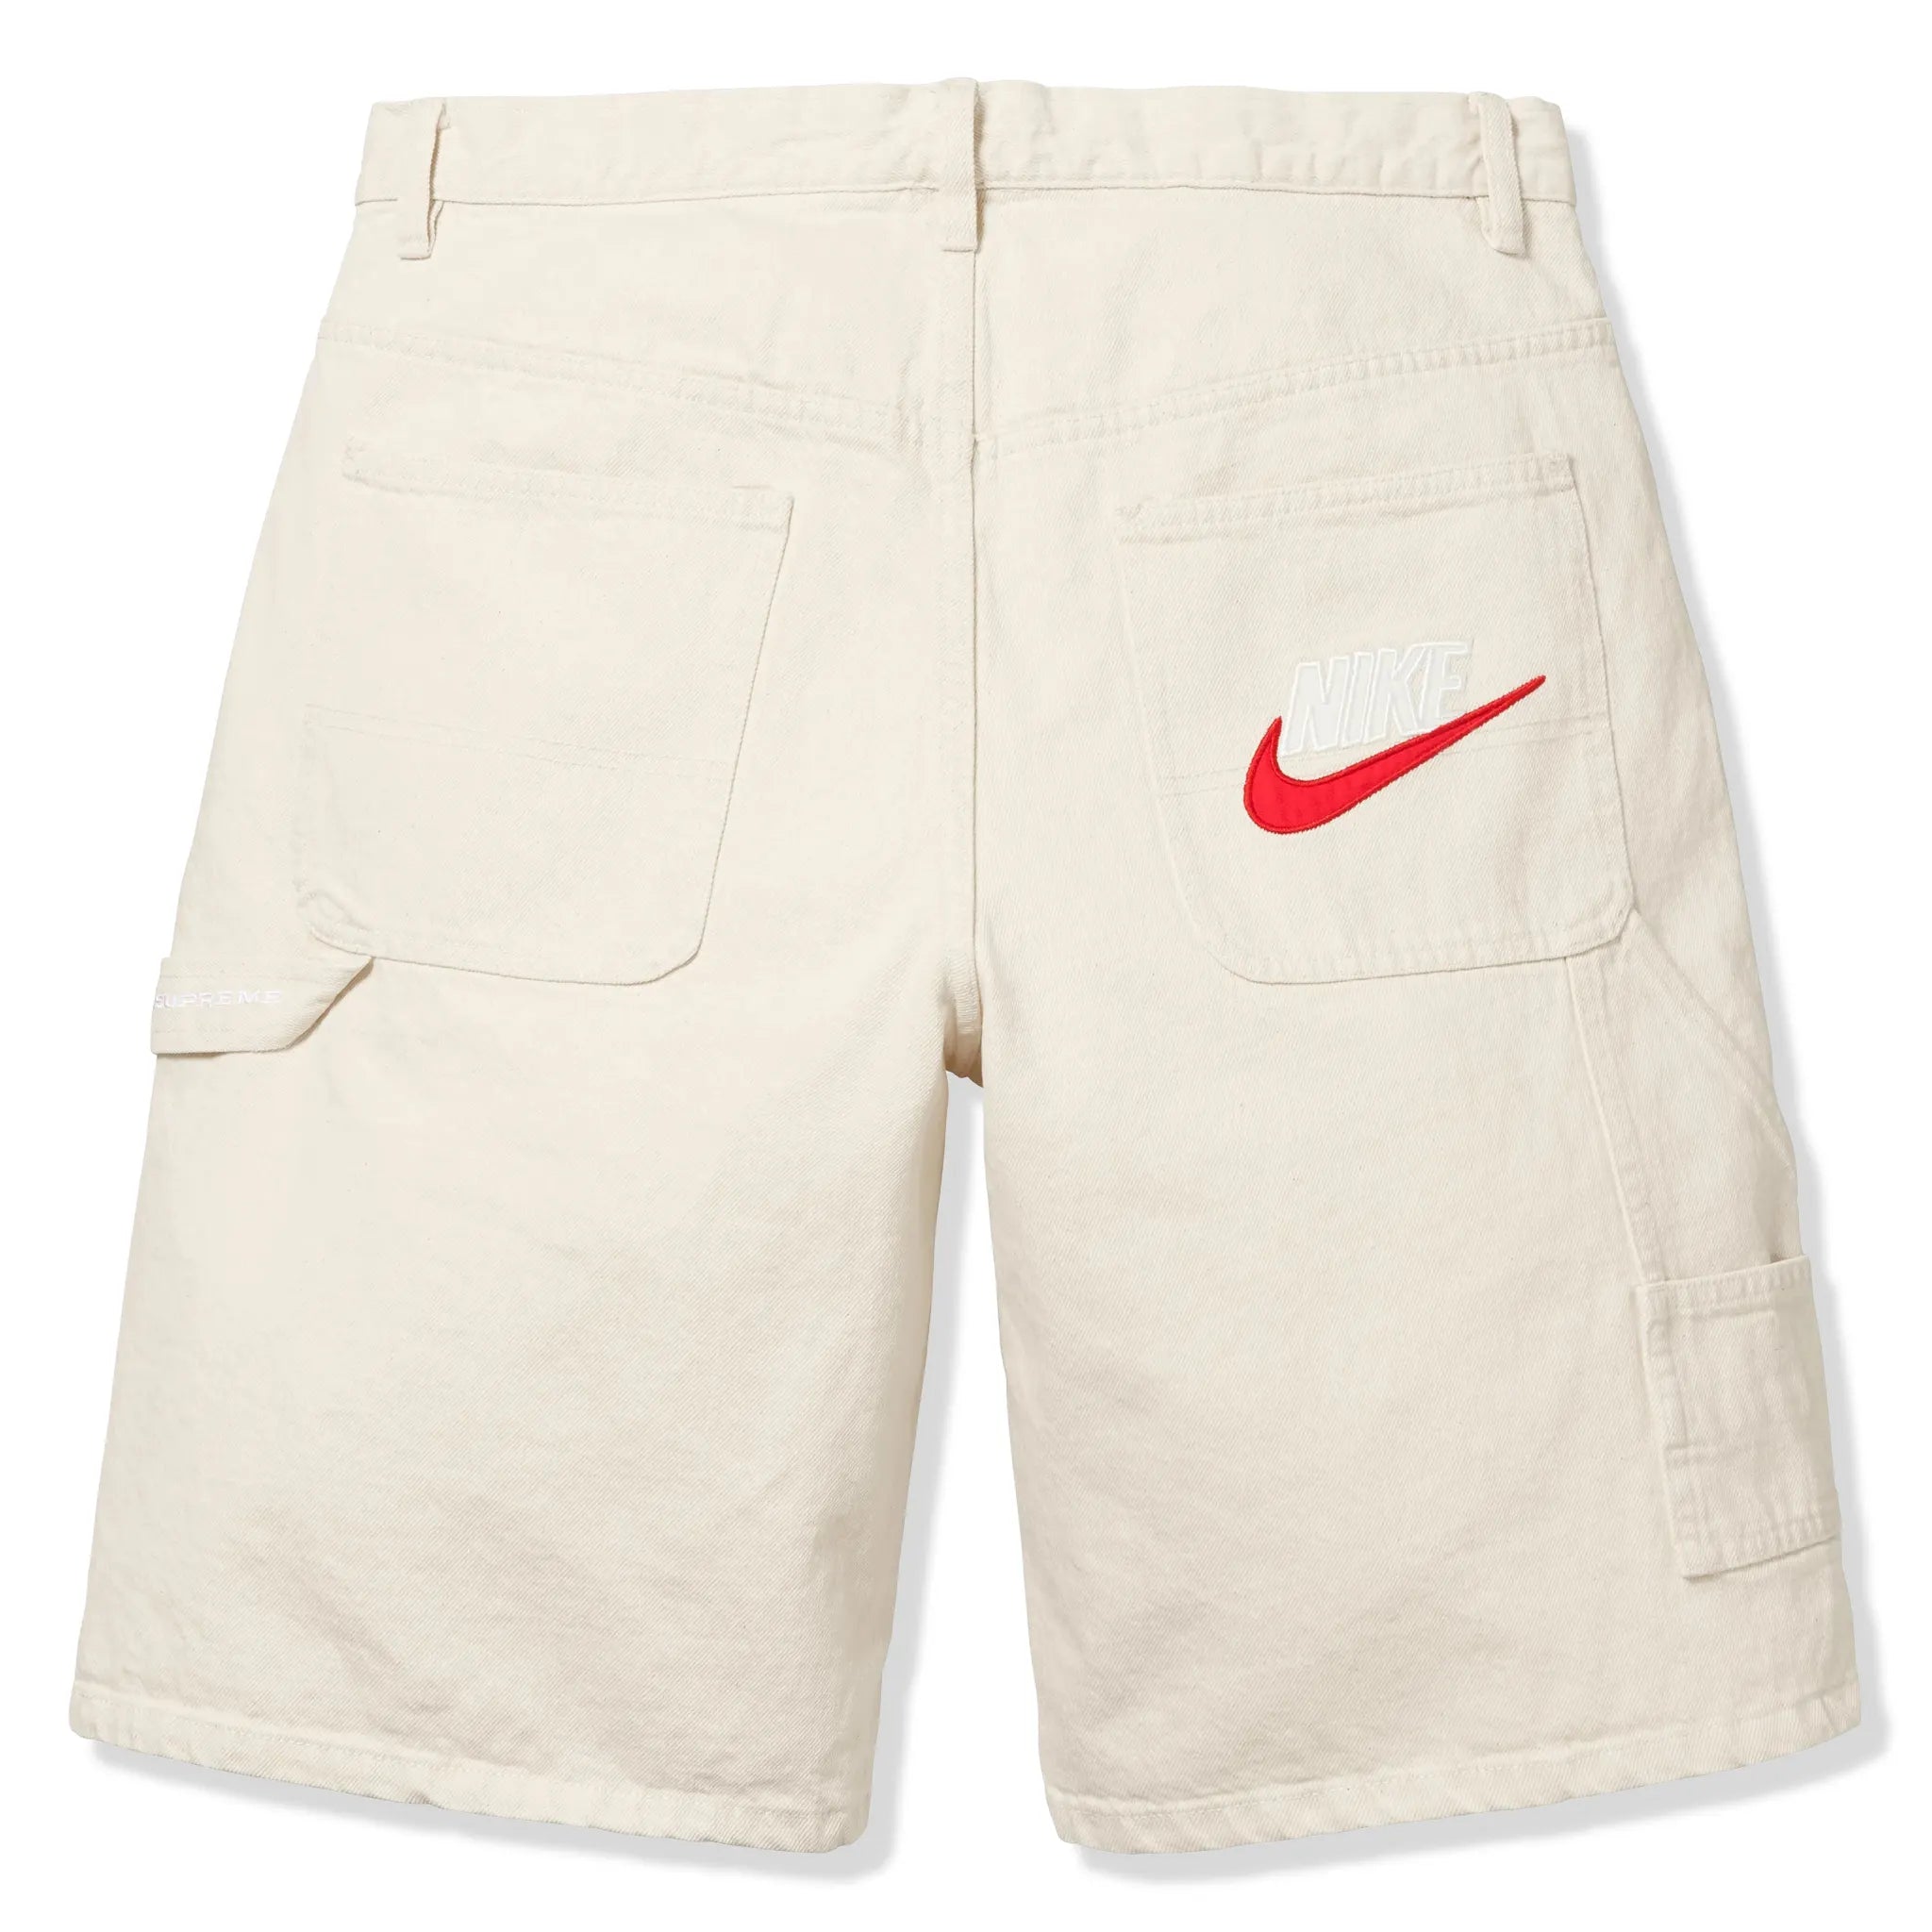 Back view of Nike Supreme Denim Natural White Shorts